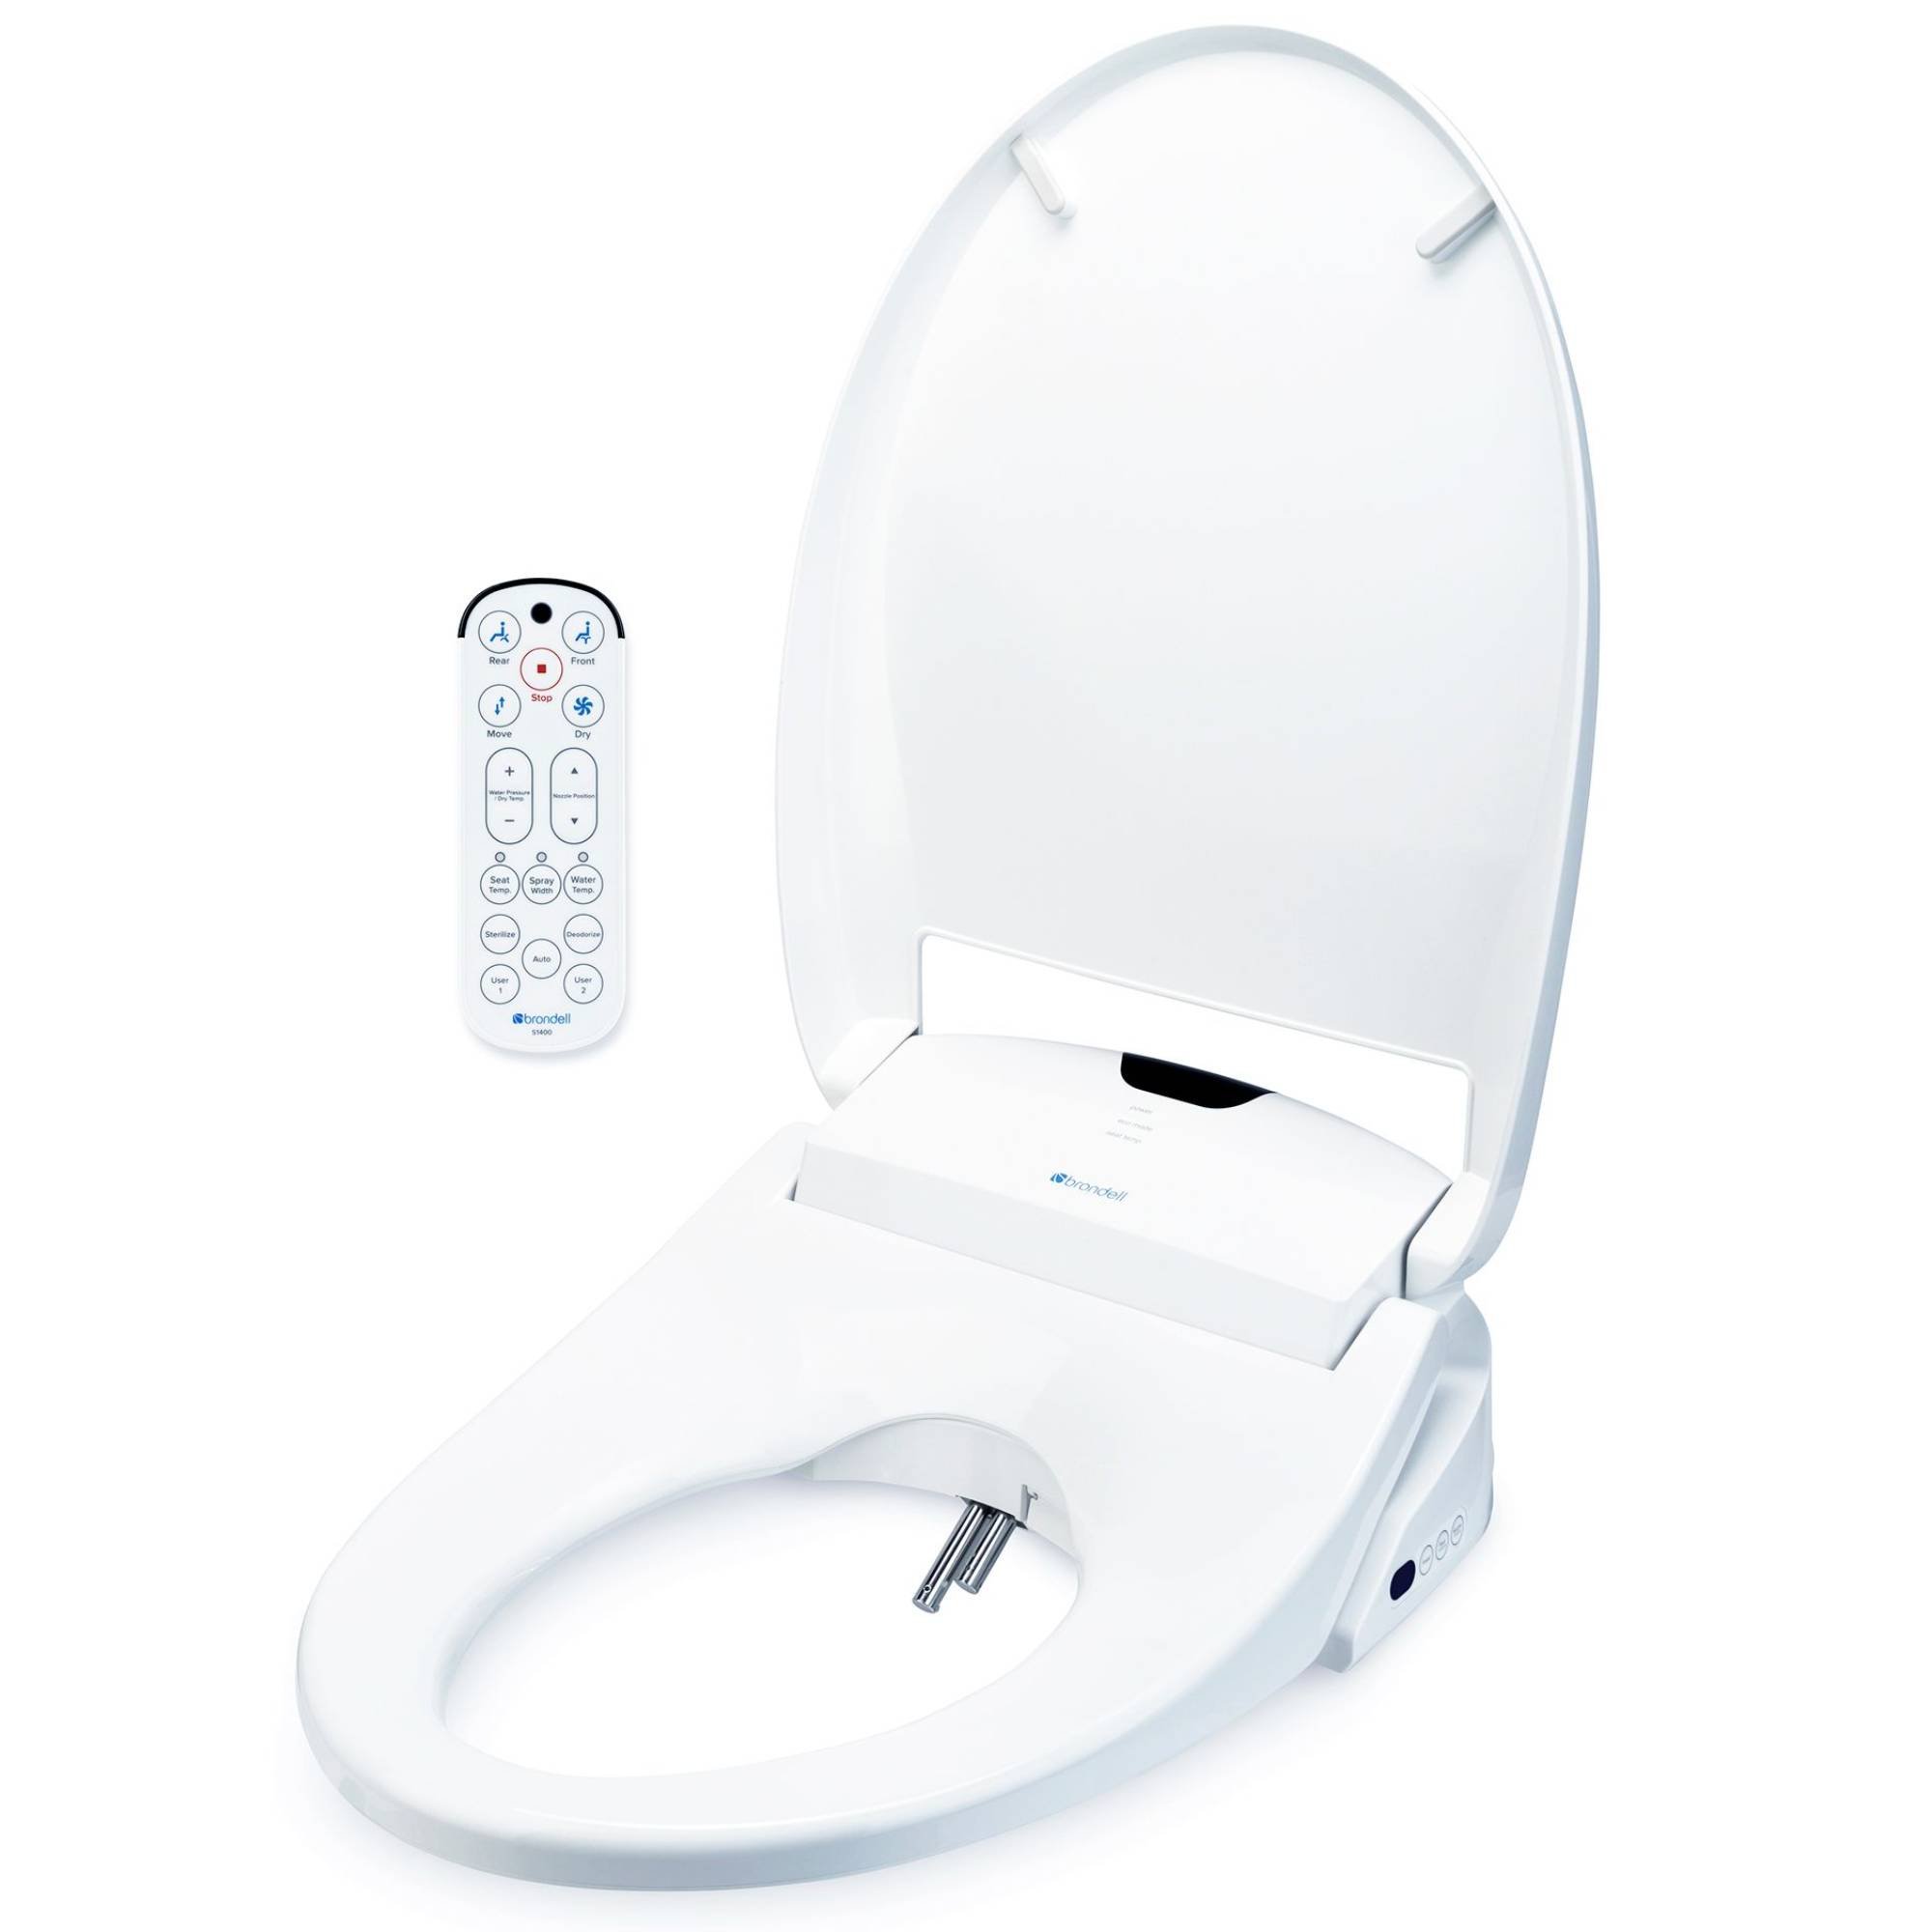 Brondell Swash 1400 White Luxury Bidet Toilet Seat - Round